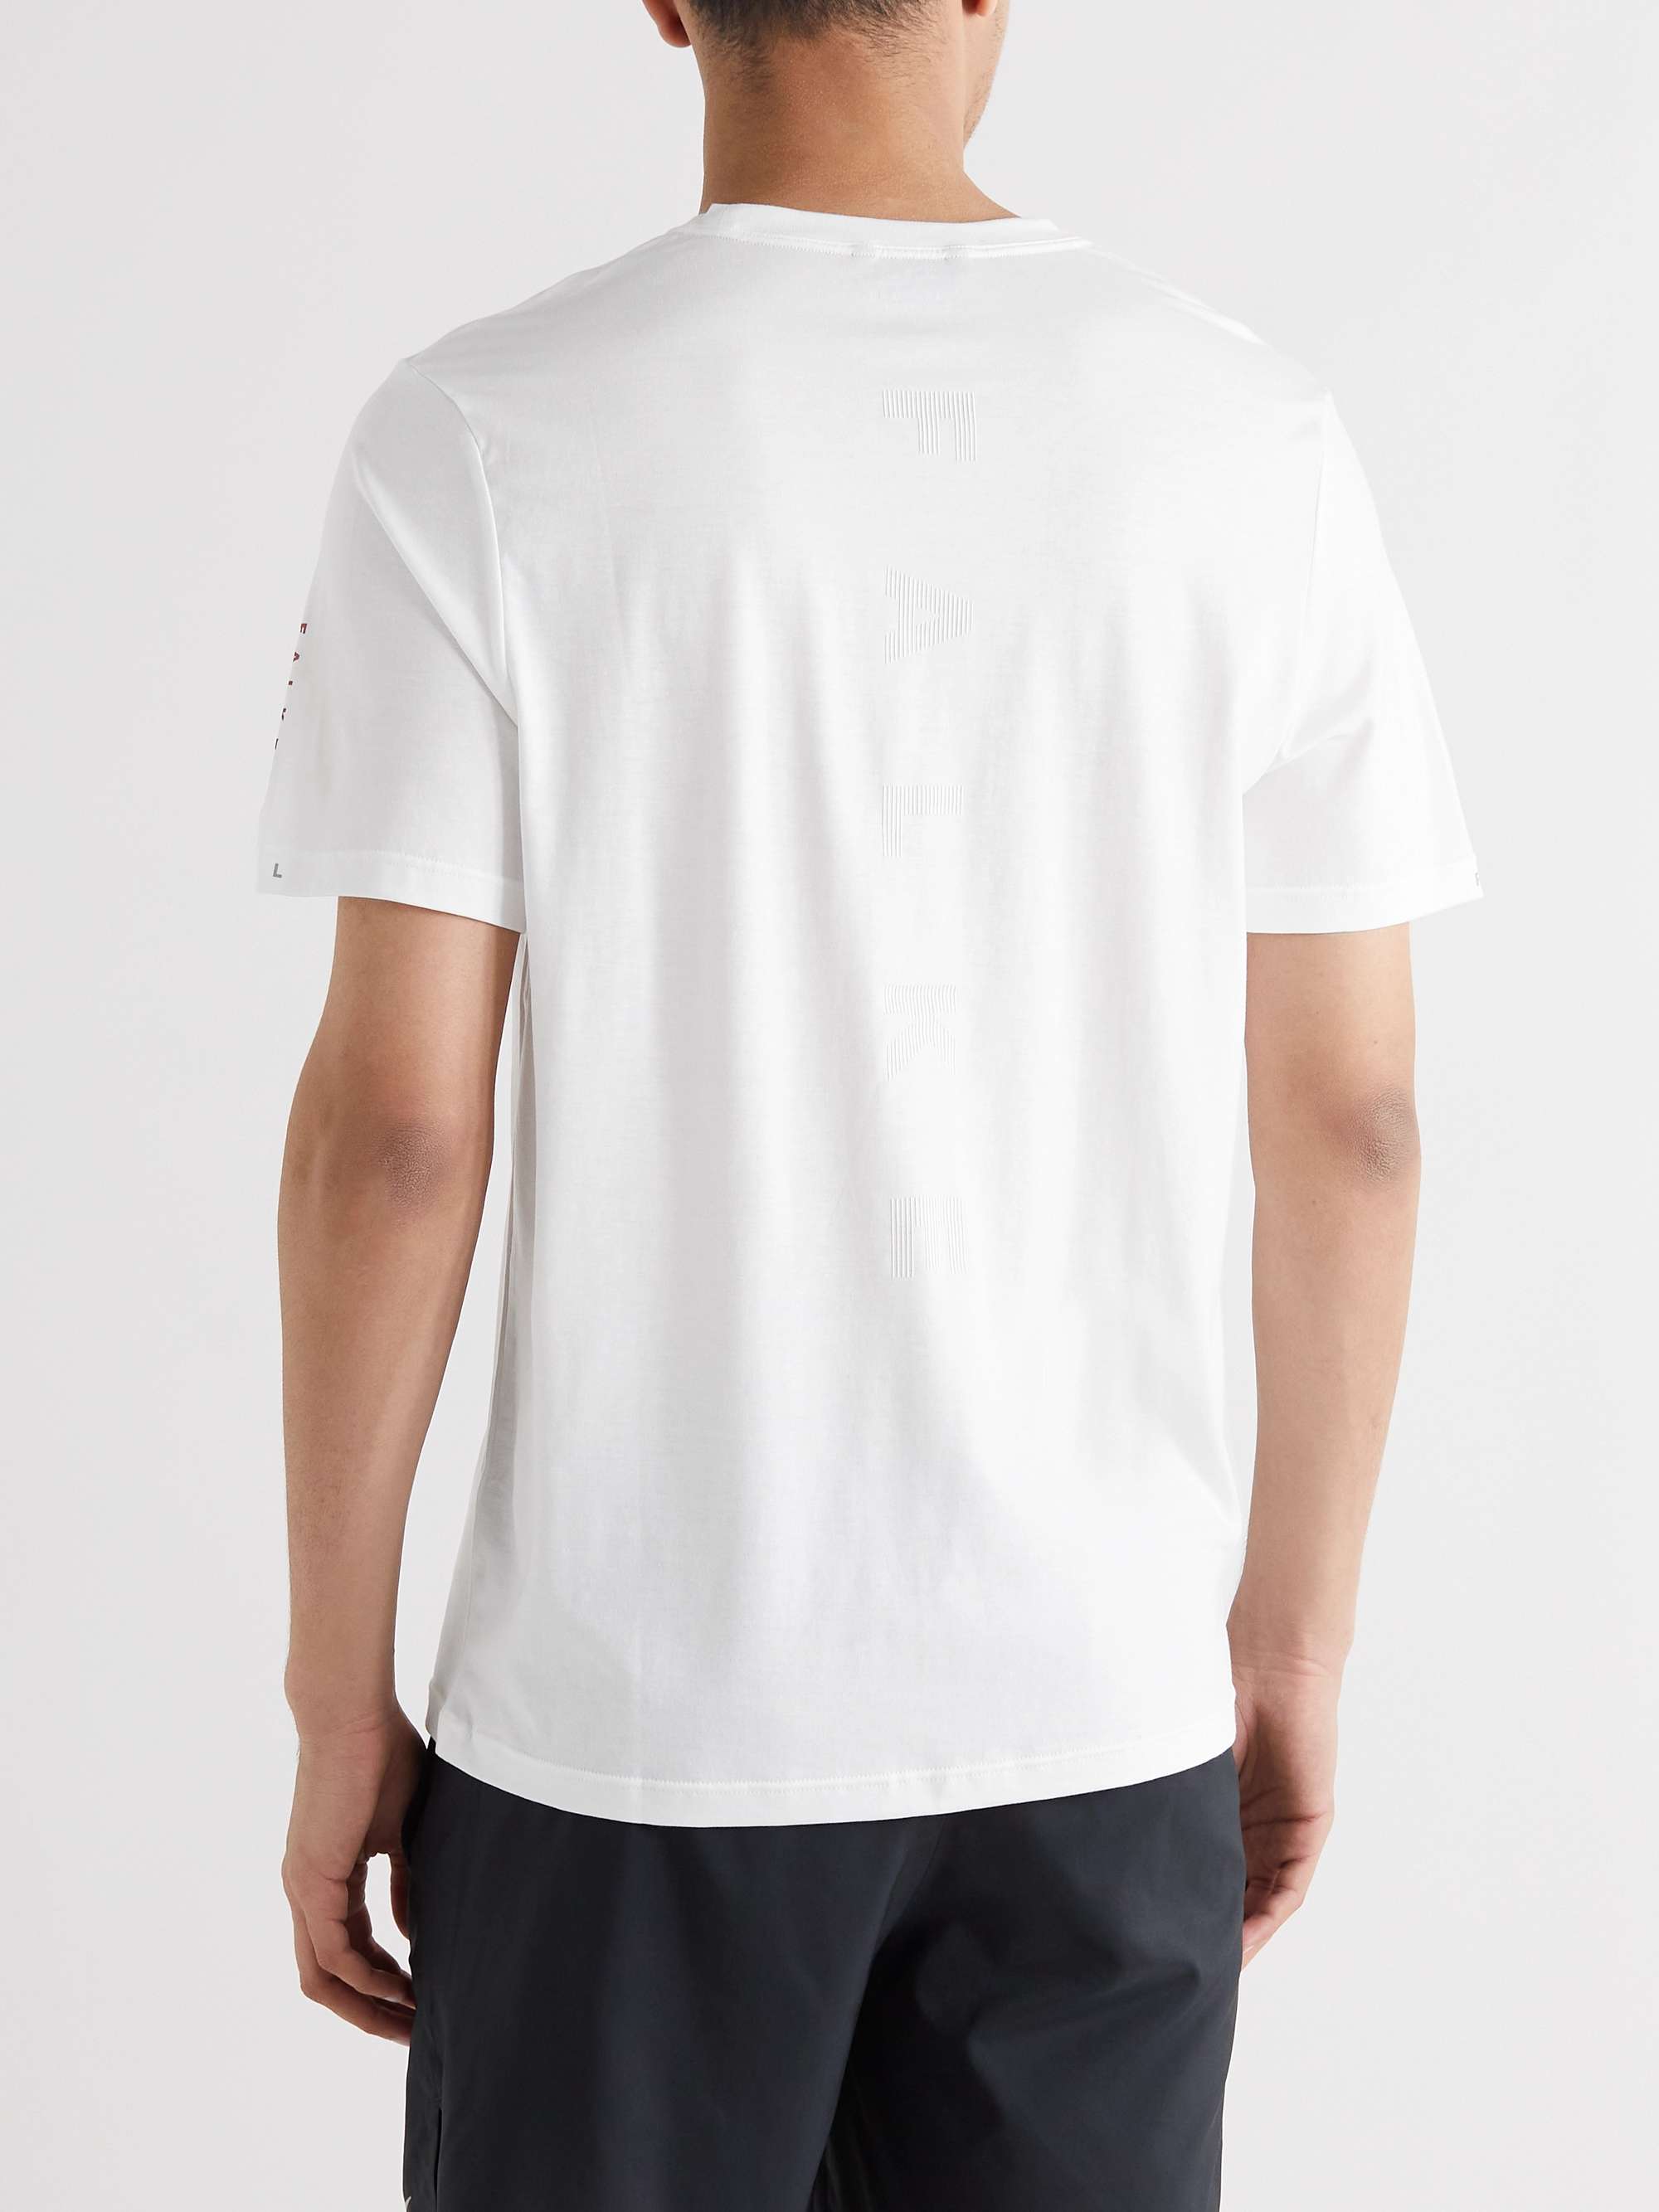 FALKE ERGONOMIC SPORT SYSTEM Printed Lyocell and Cotton-Blend Jersey T-Shirt